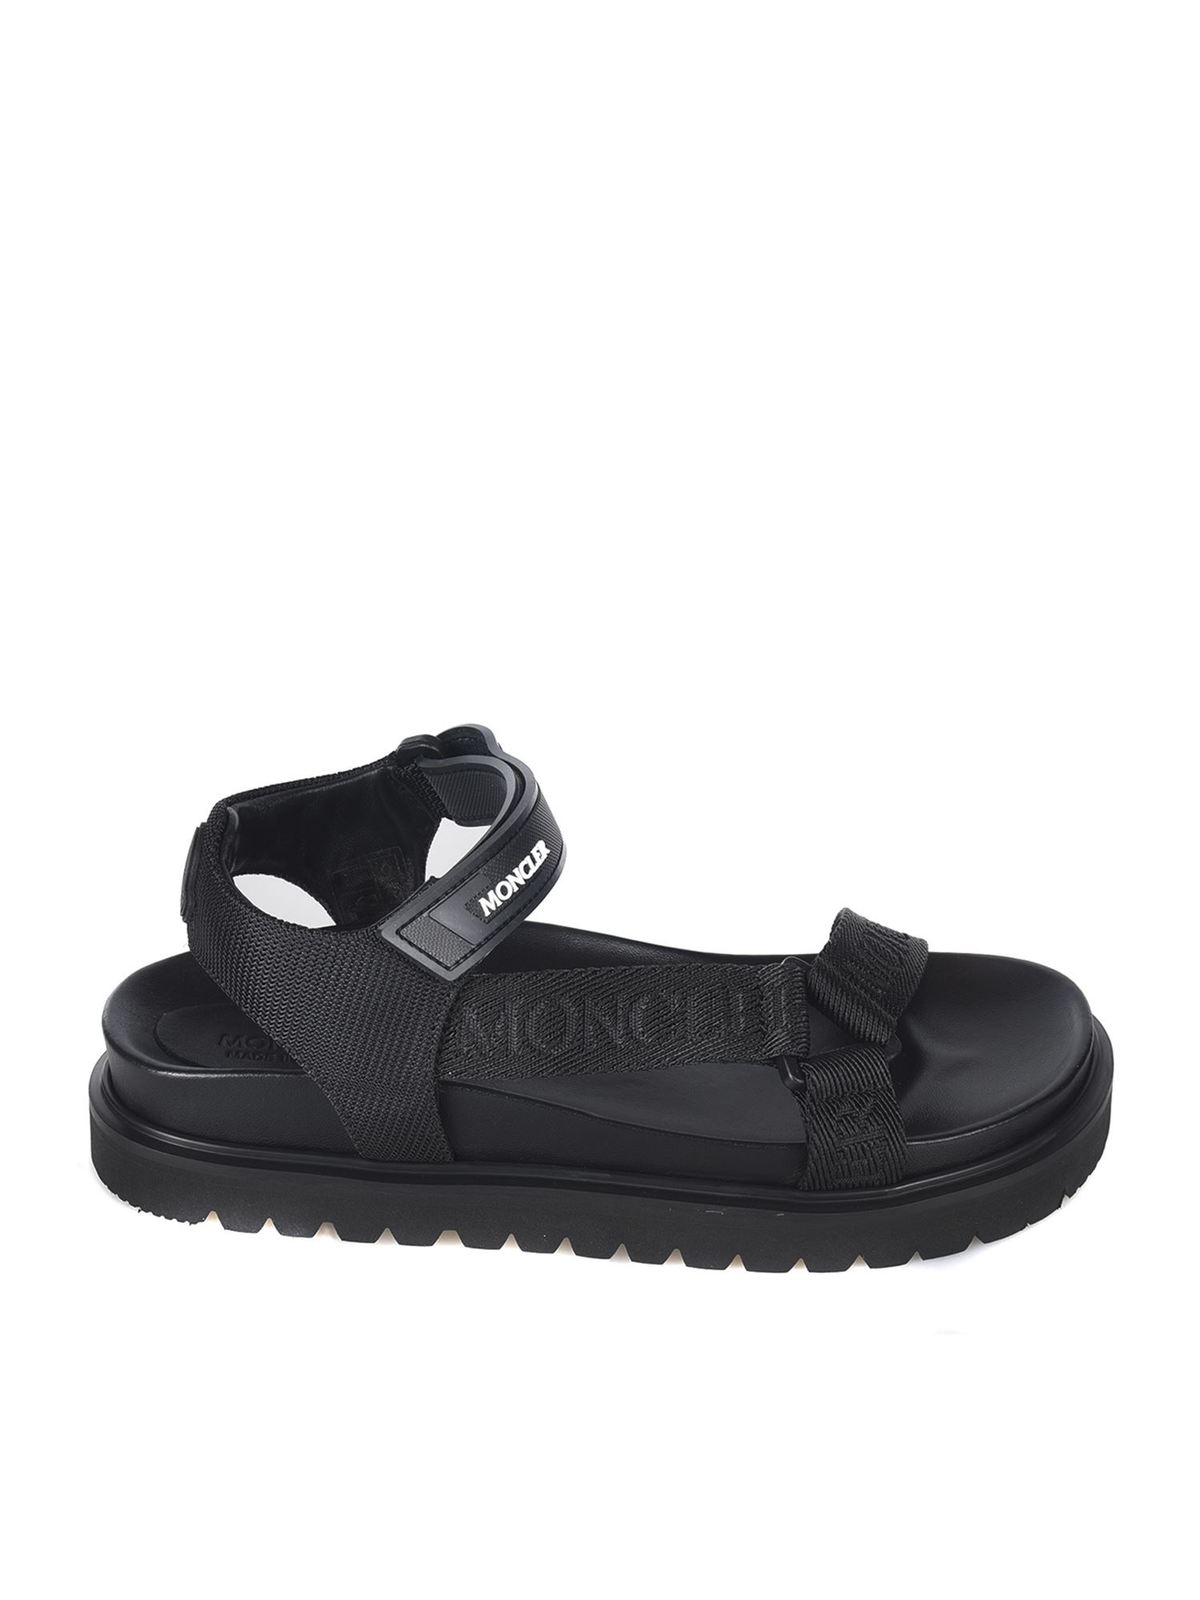 Sandals Moncler - Flavia sandals - 4L7110002SS1998 | Shop online at iKRIX